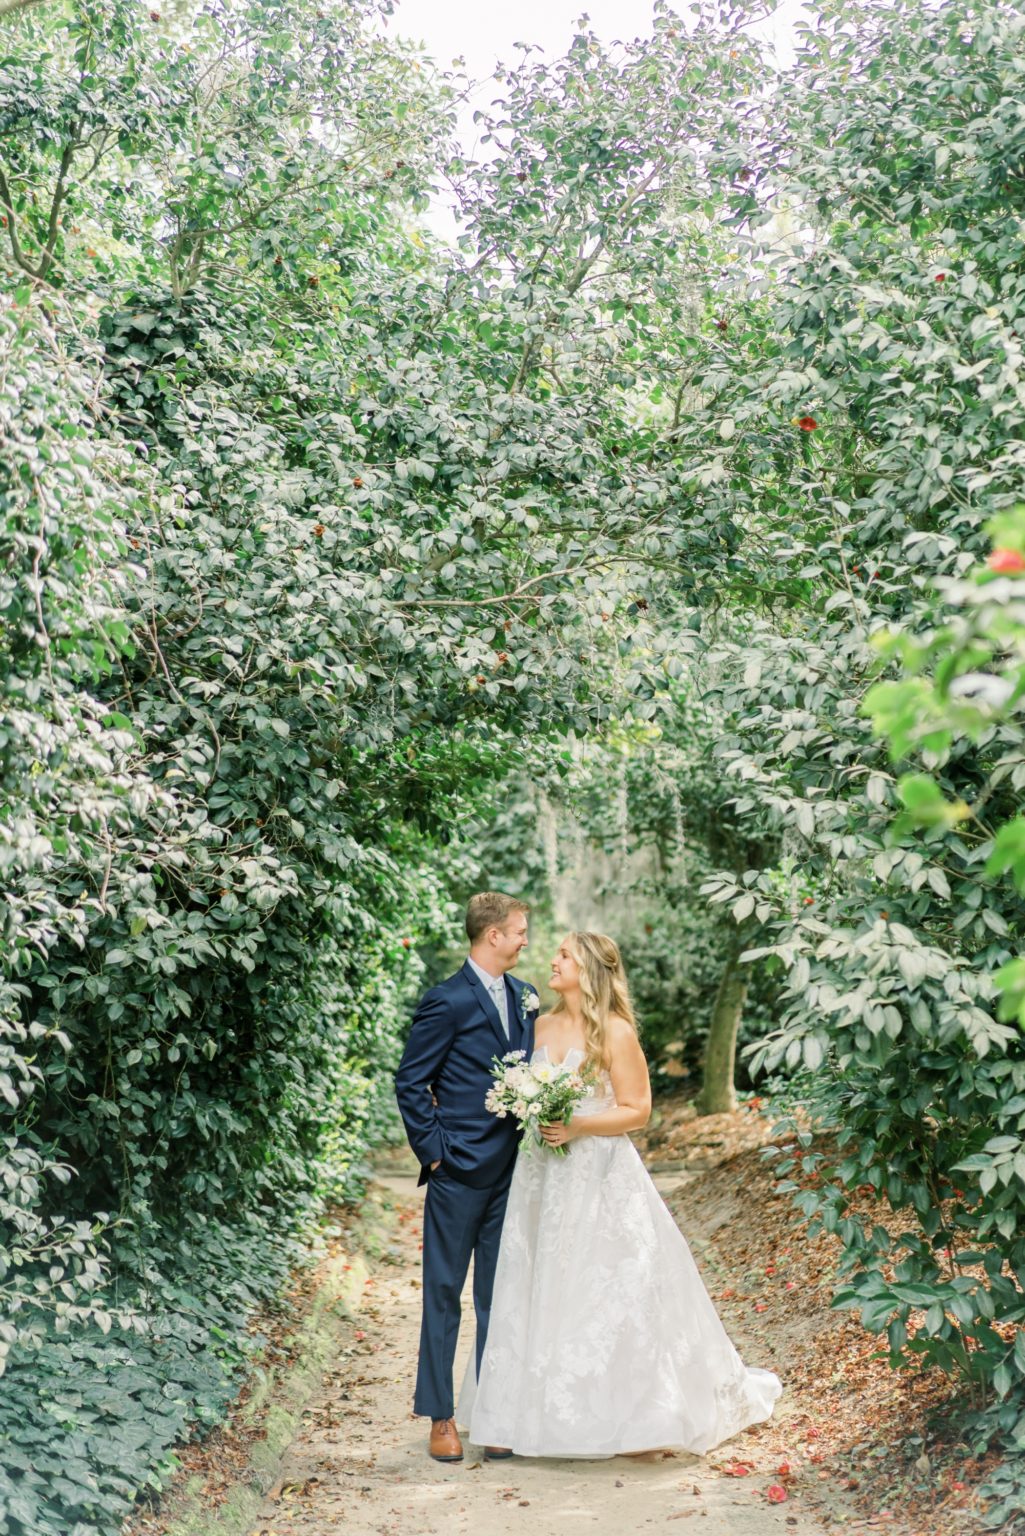 Blog - Cincinnati Wedding Photographer | Megan Noll Photography Blog